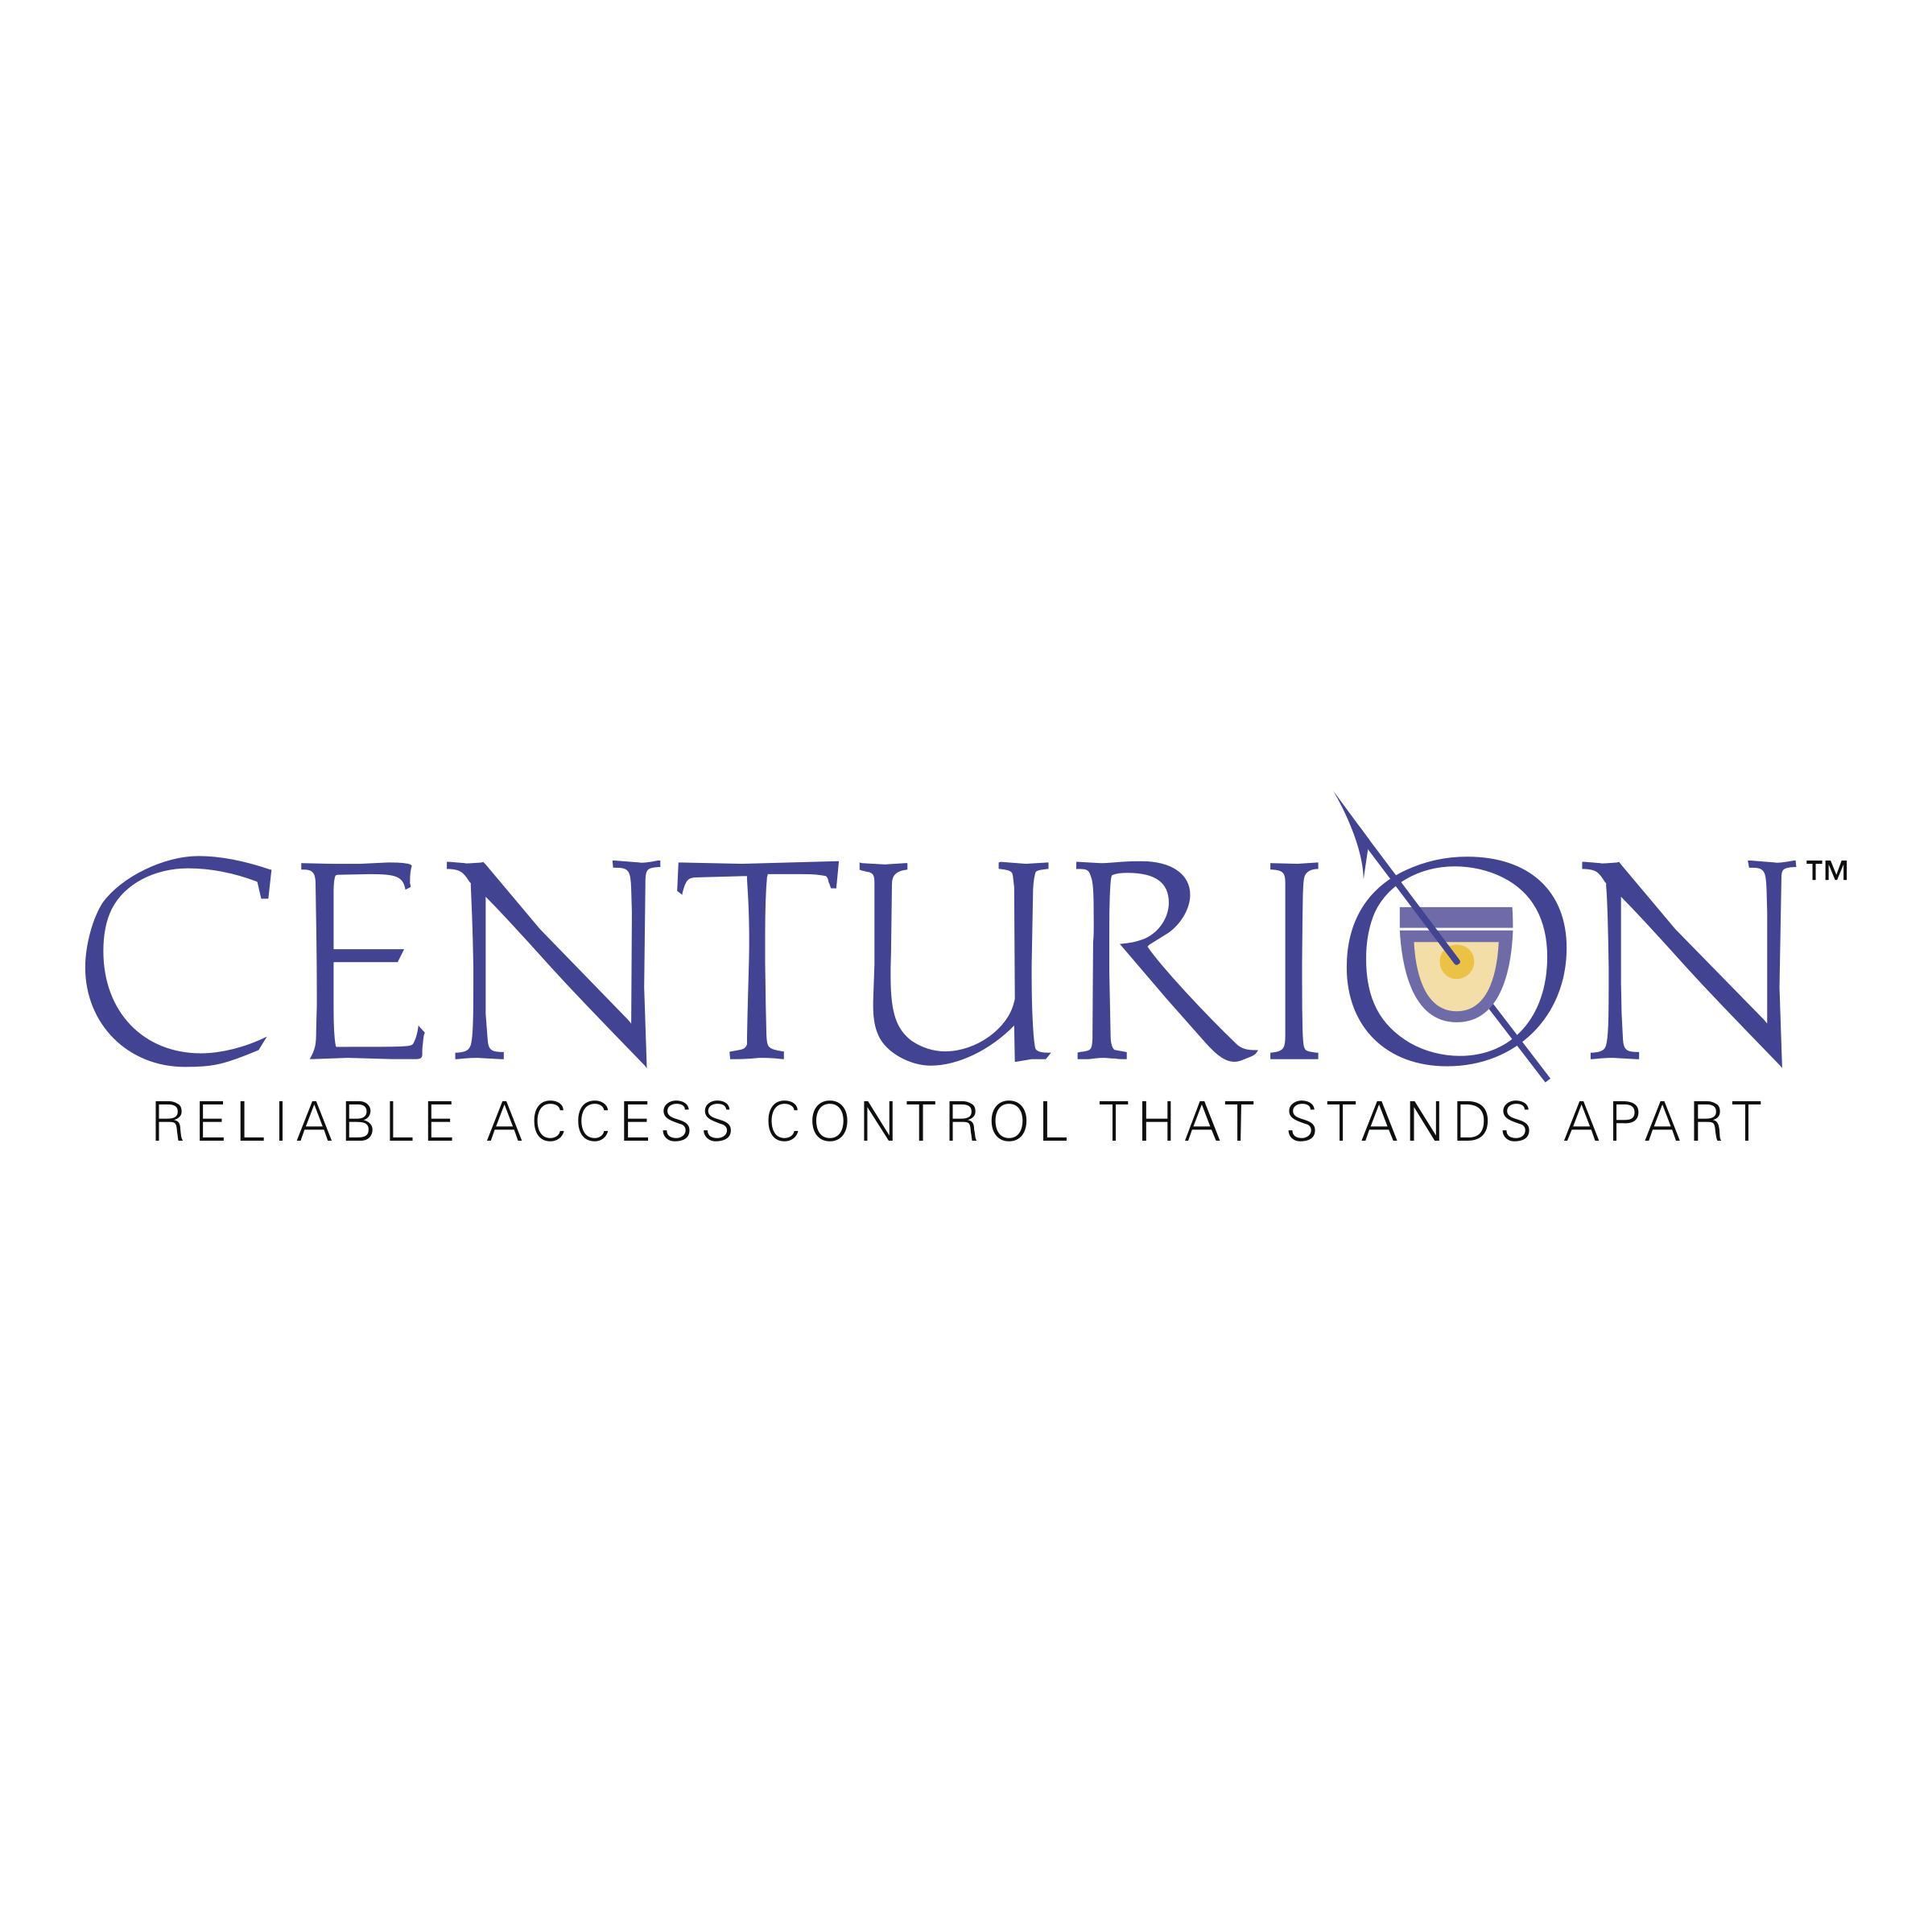 Centurian Logo - Centurion Logo PNG Transparent & SVG Vector